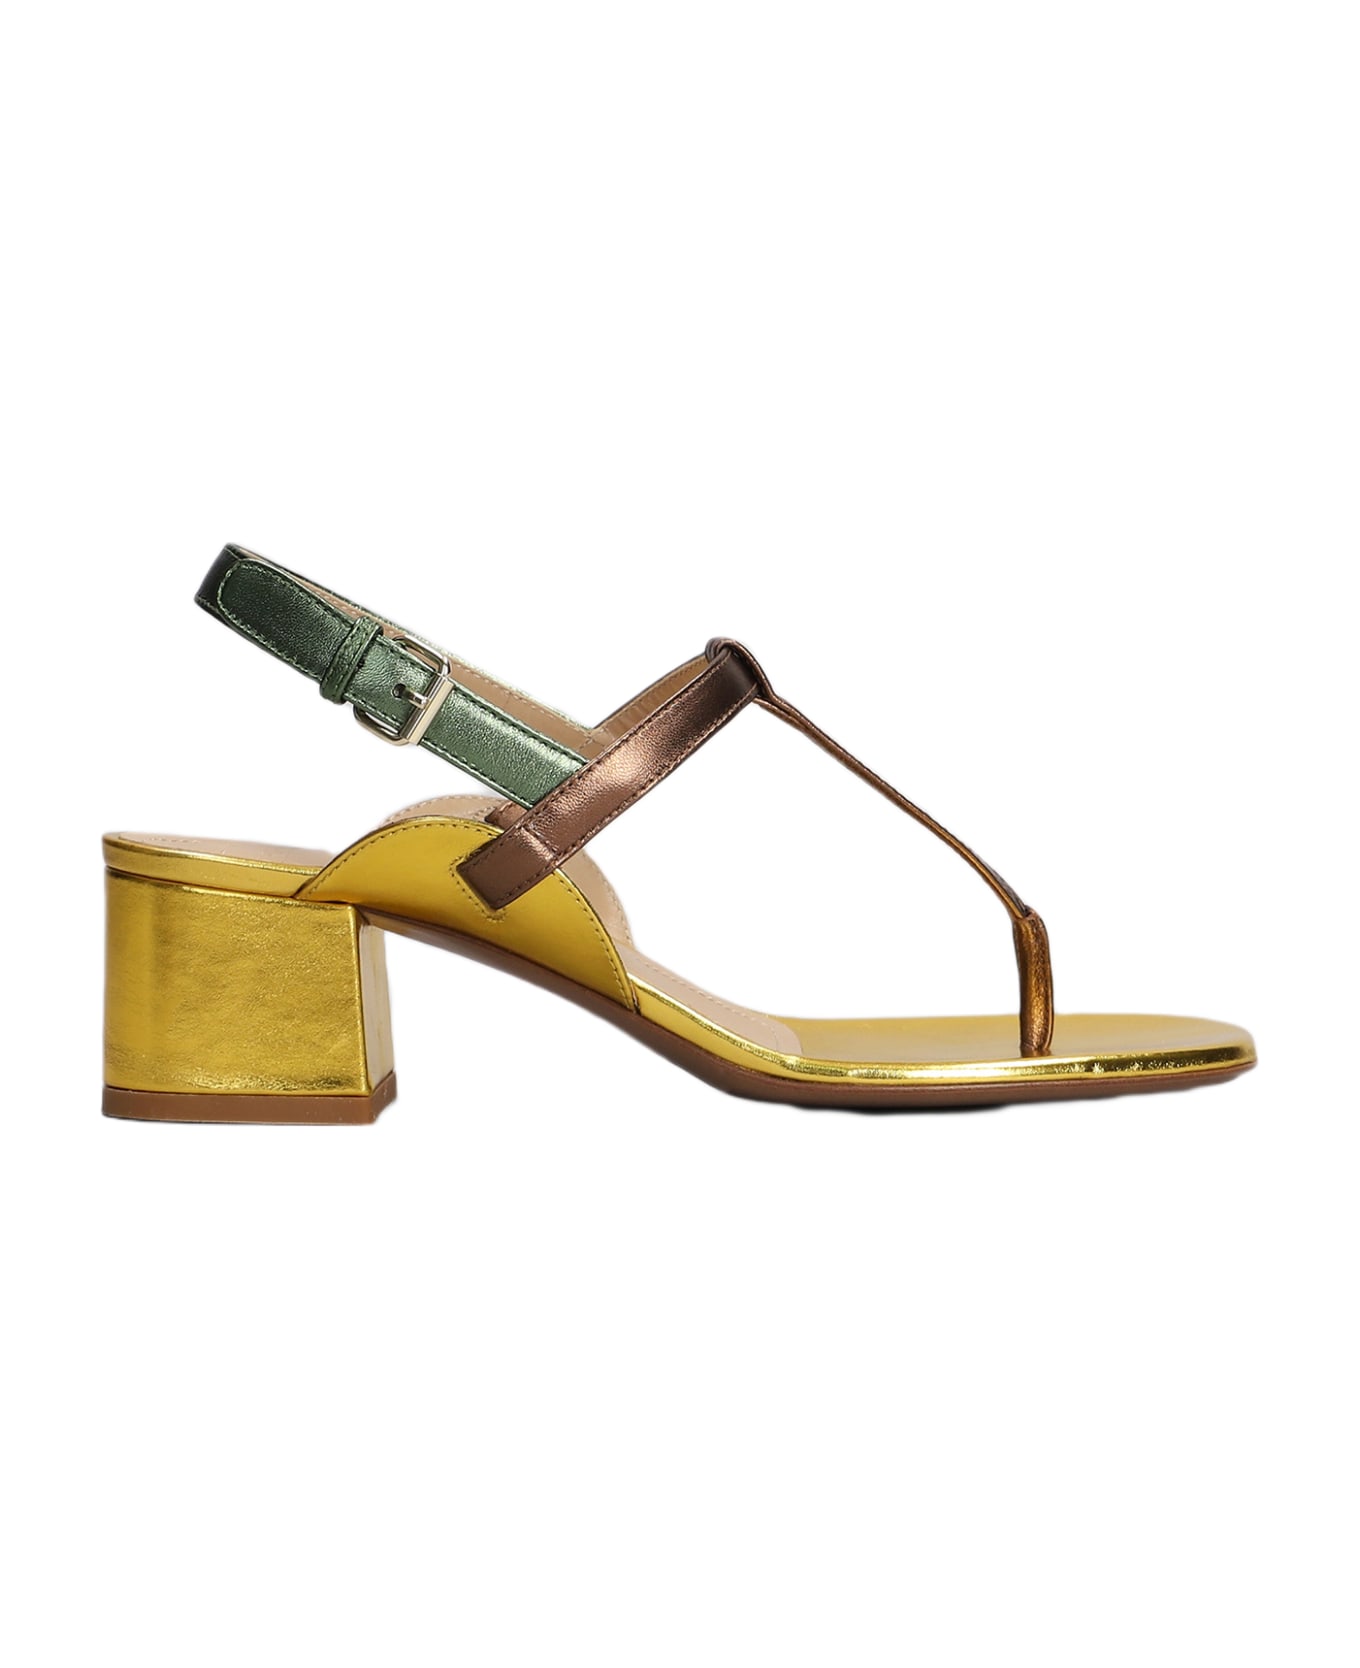 Relac Sandals In Multicolor Leather - multicolor サンダル